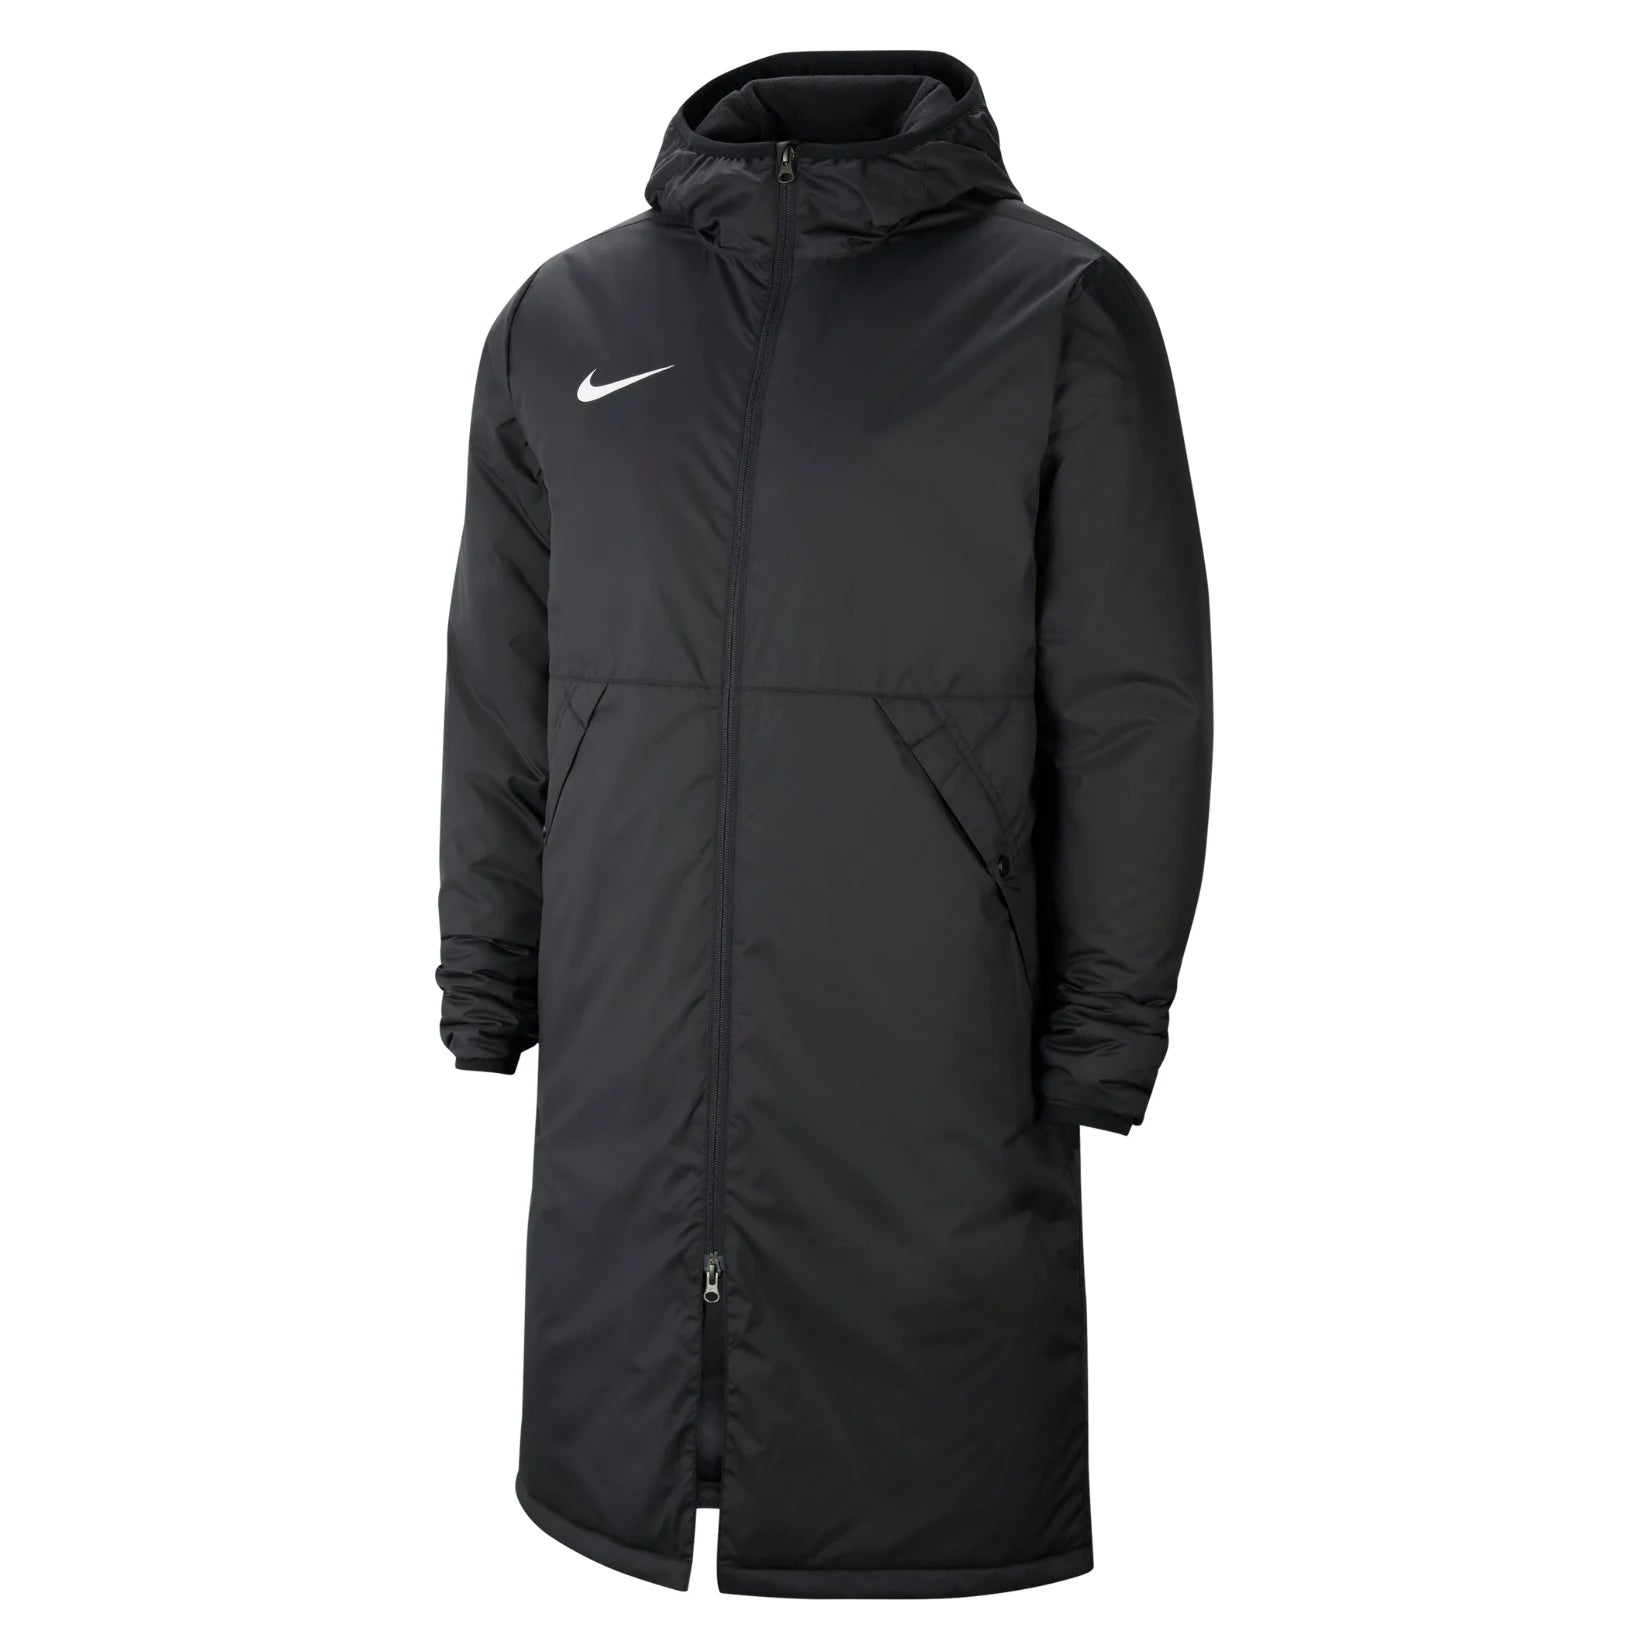 Nike Winter Jacket - A&H International